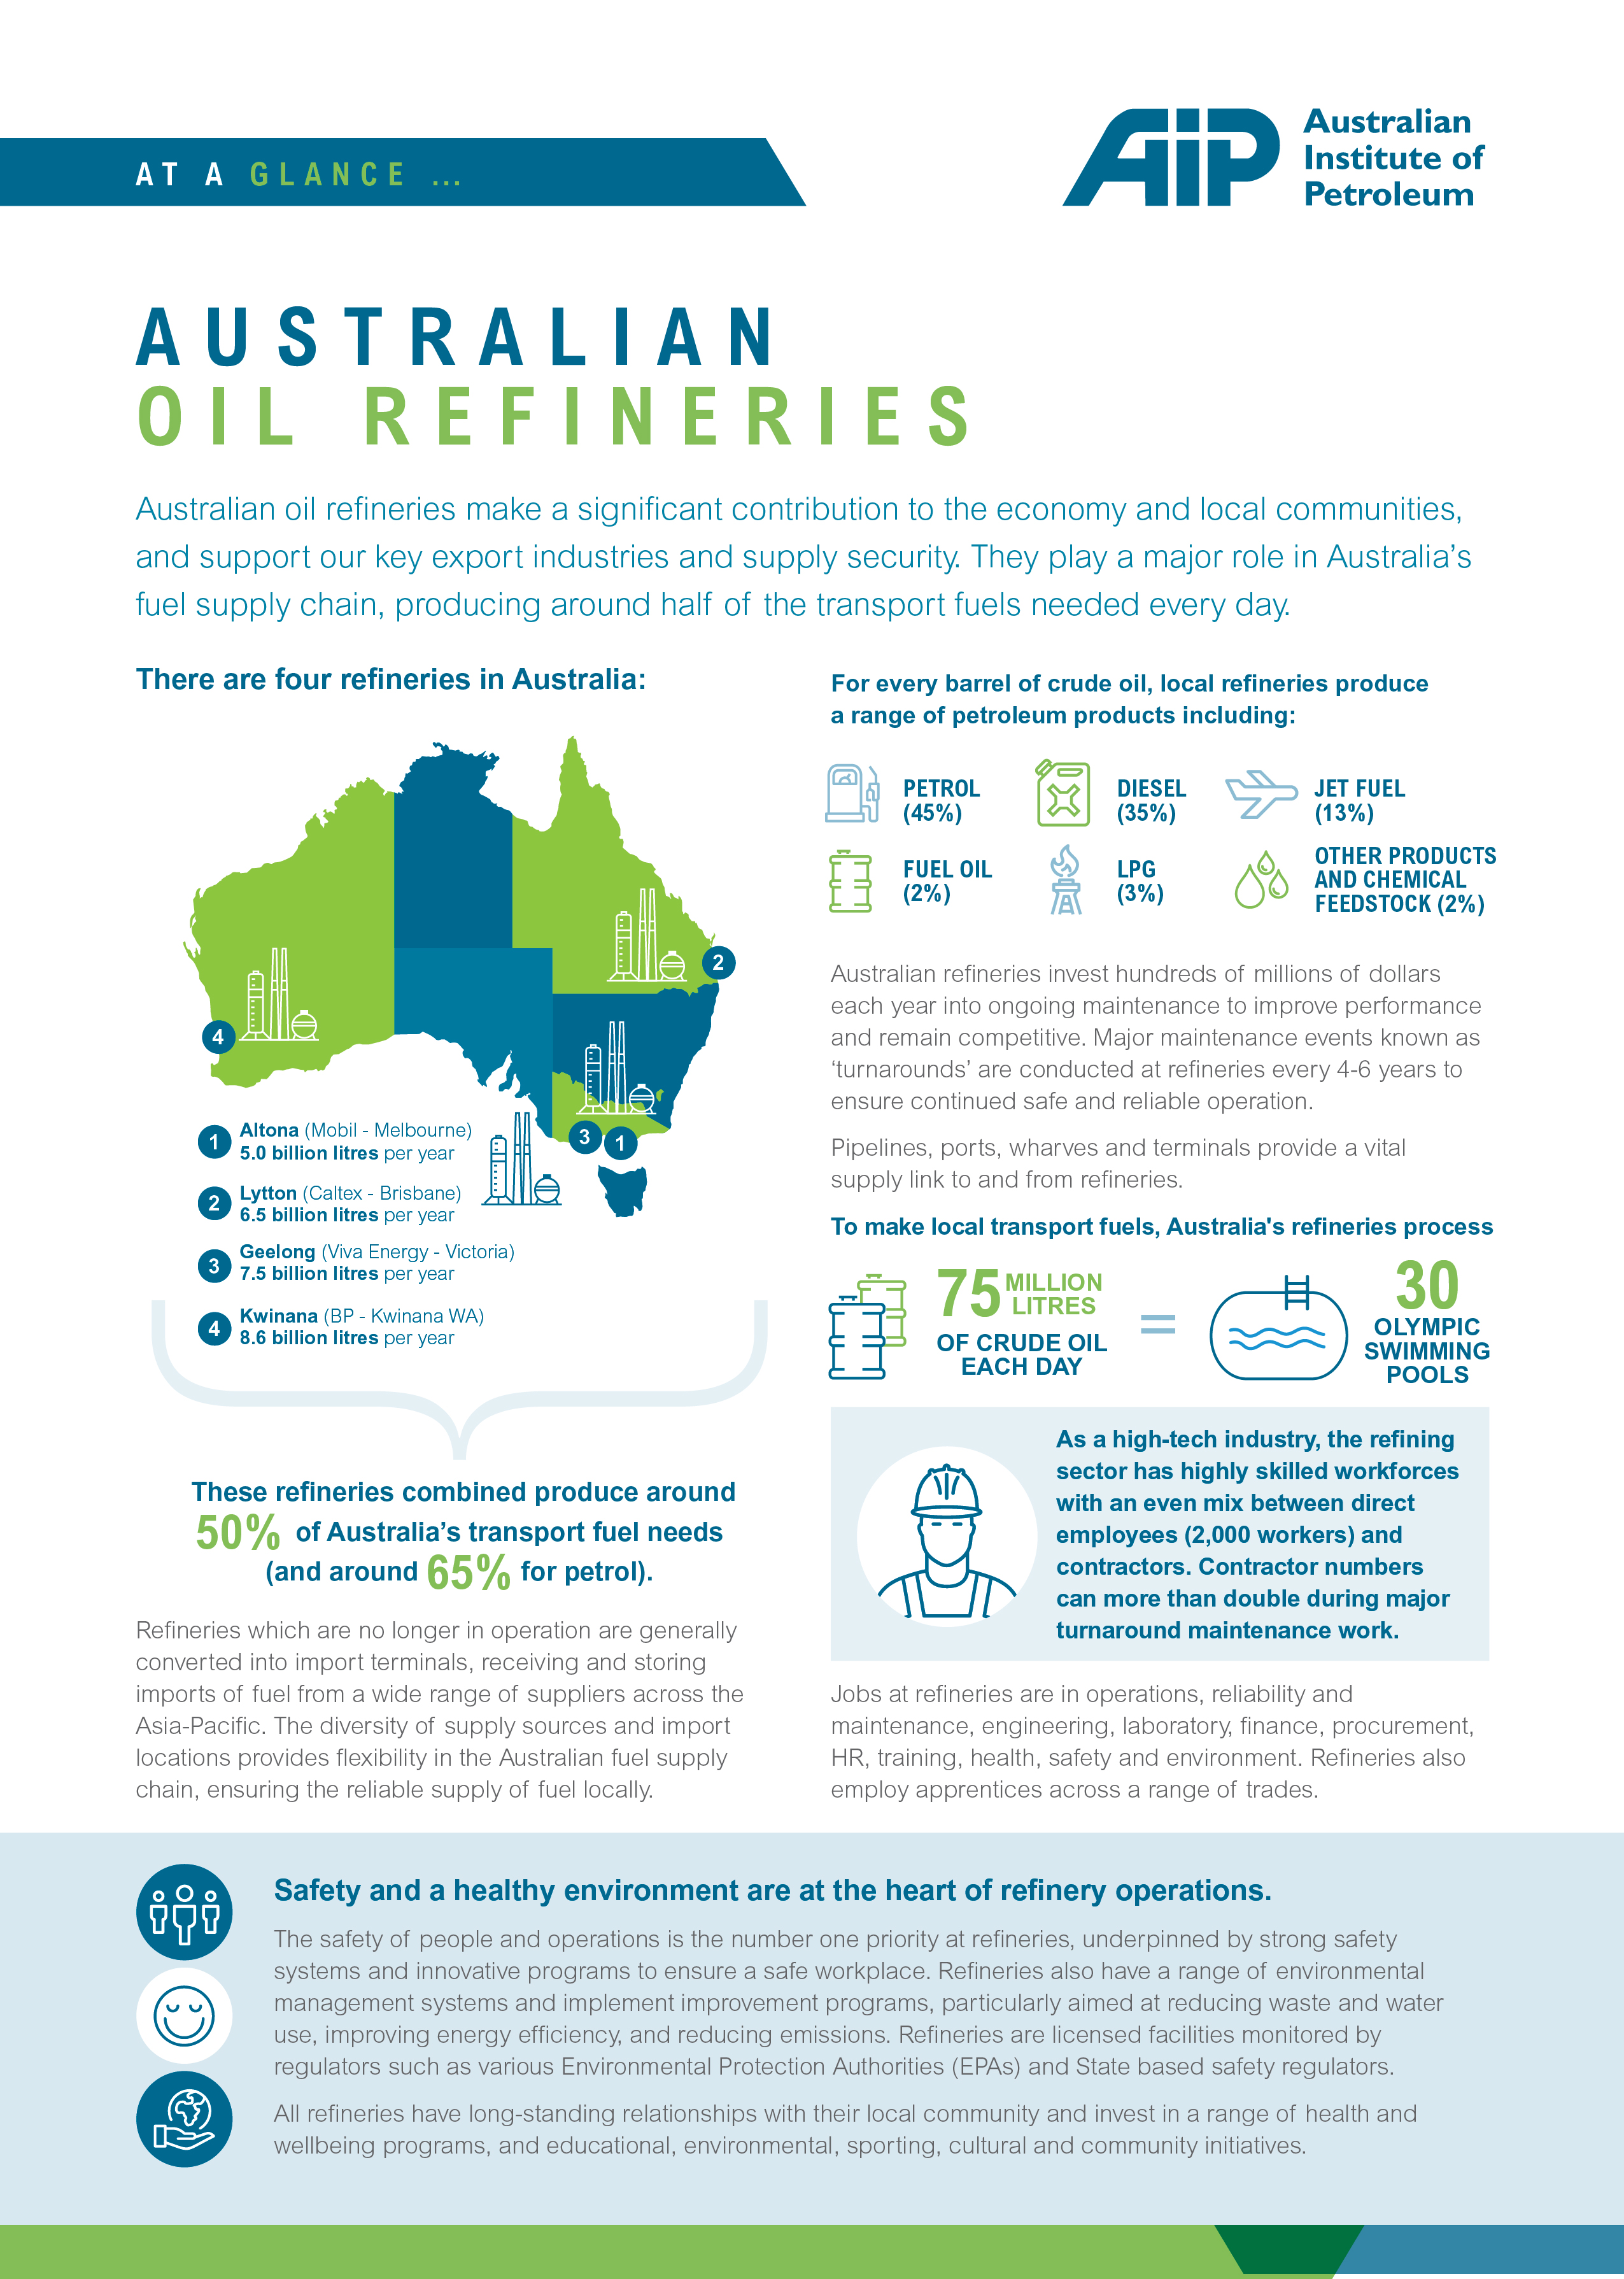 At a Glance: Australian Oil Refineries